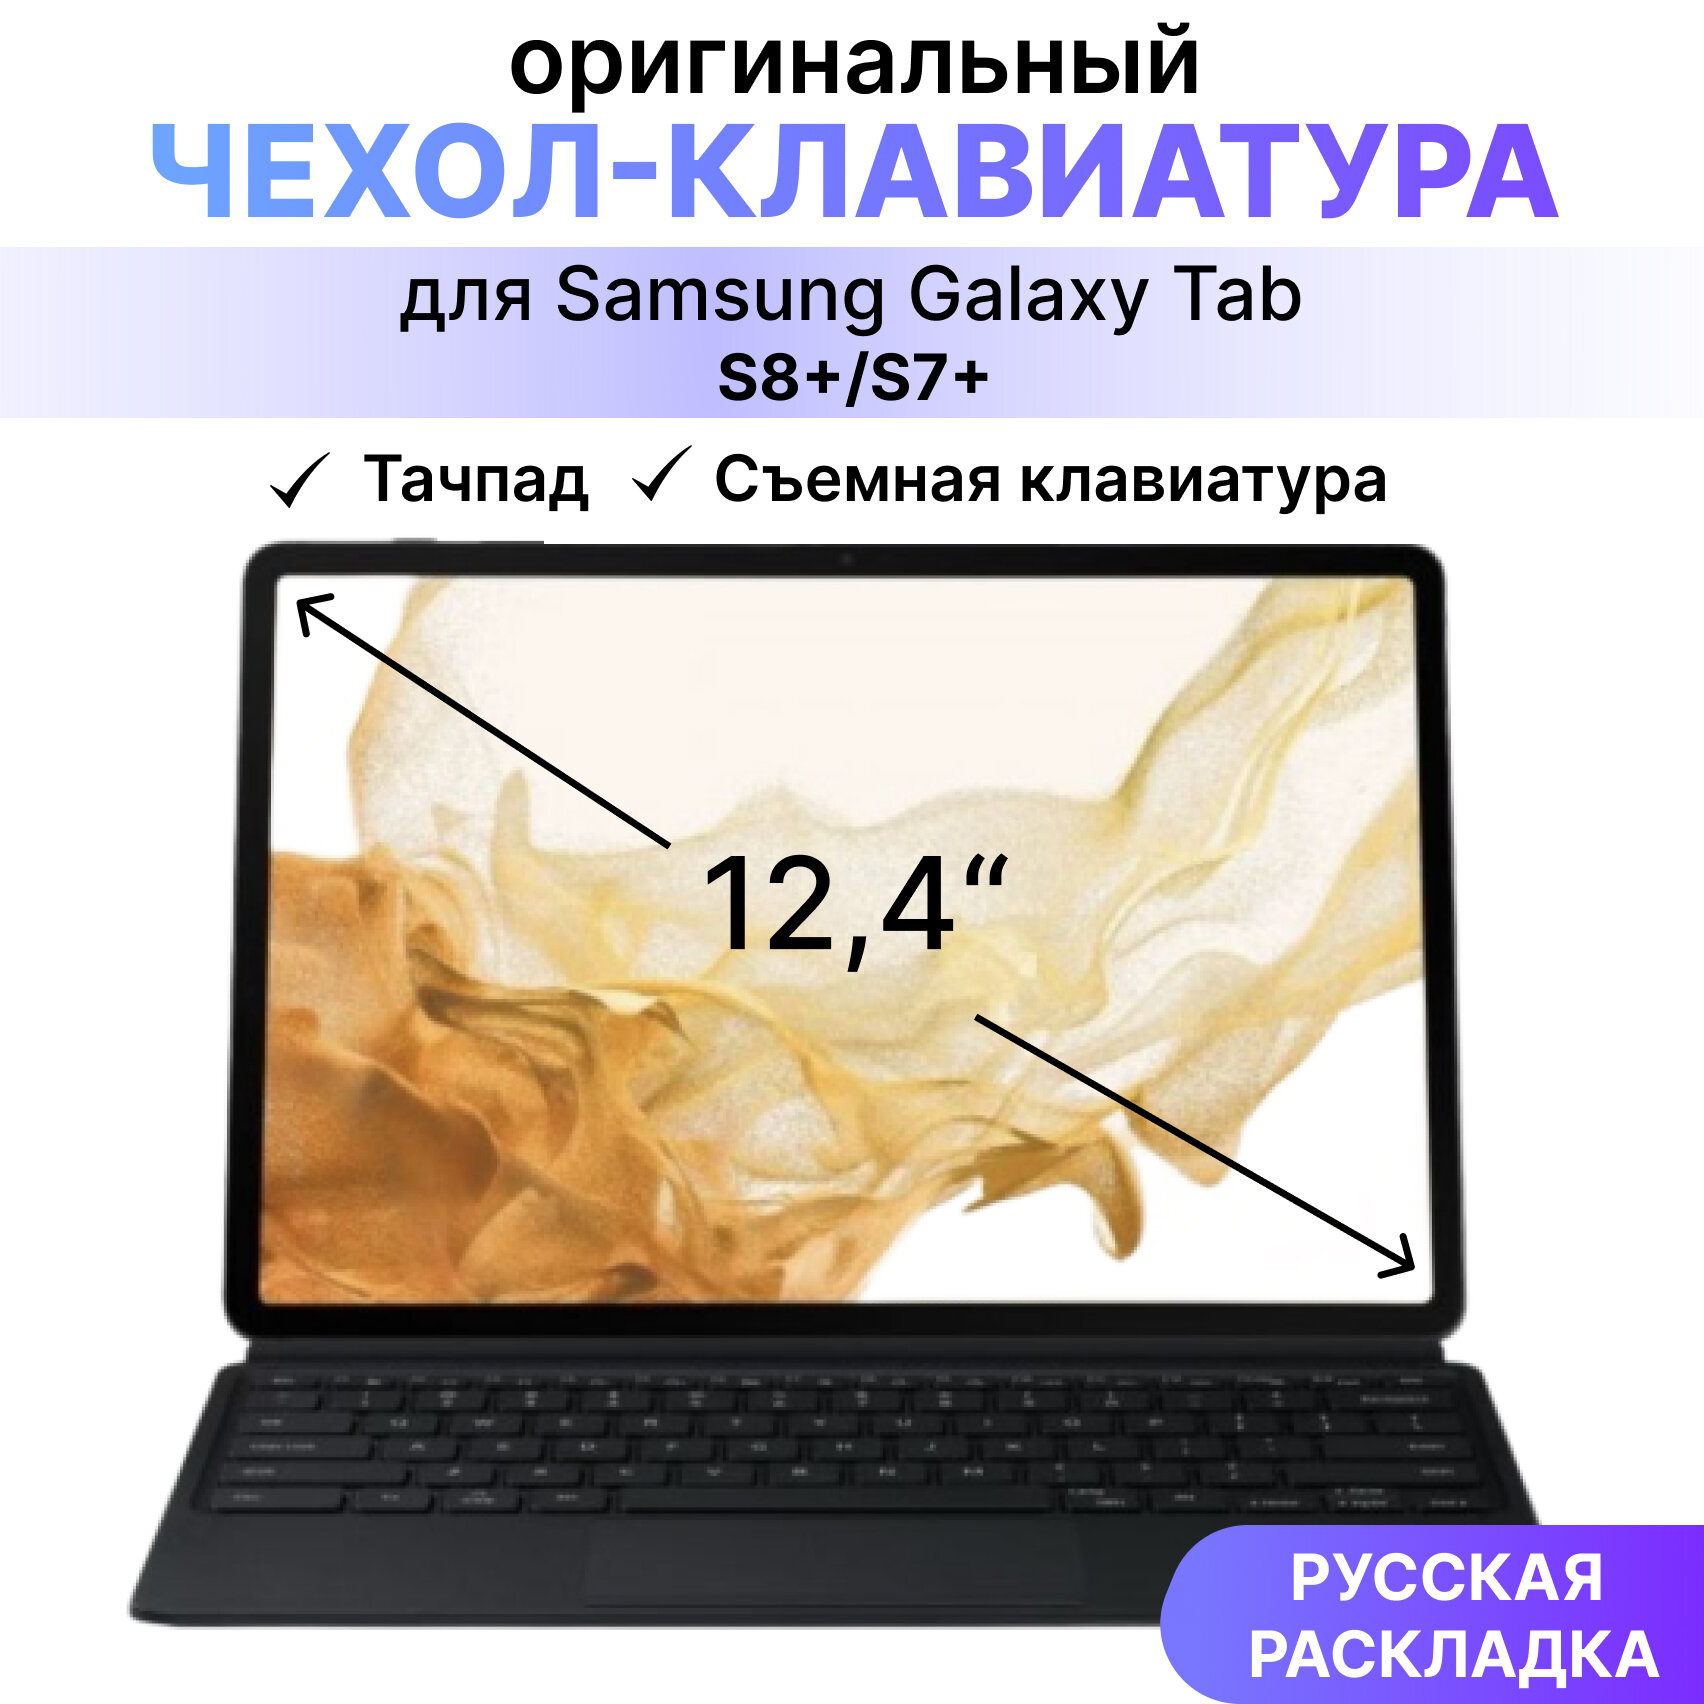 Чехол-клавиатура для Samsung Galaxy Tab S8+, цвет Черный